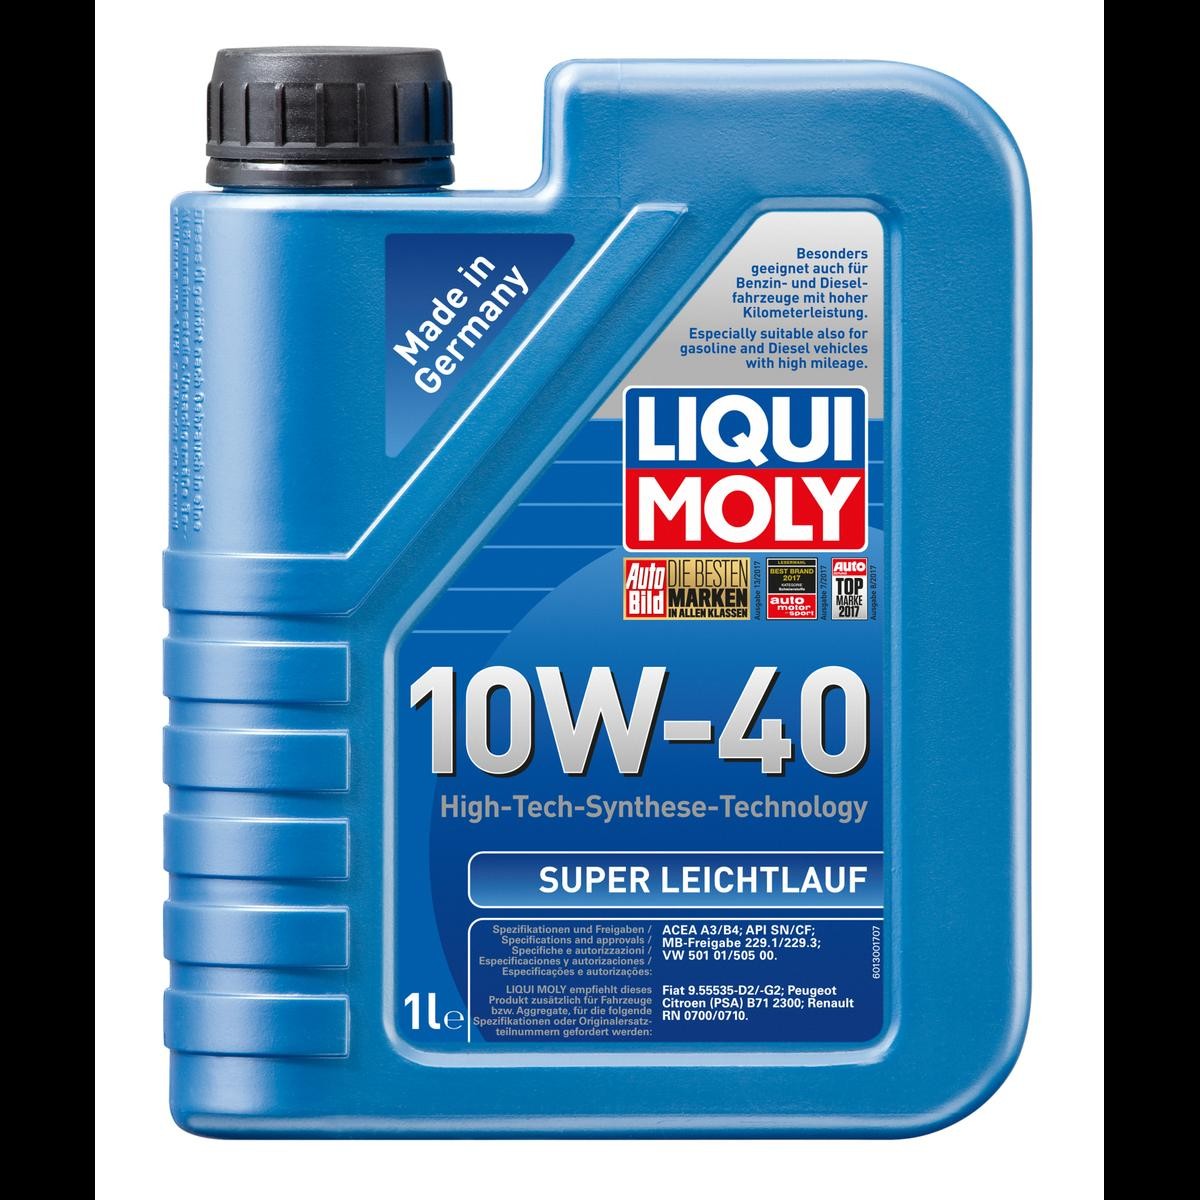 LIQUI MOLY Leichtlauf Super 1300 HONDA Öl Preis und Erfahrung